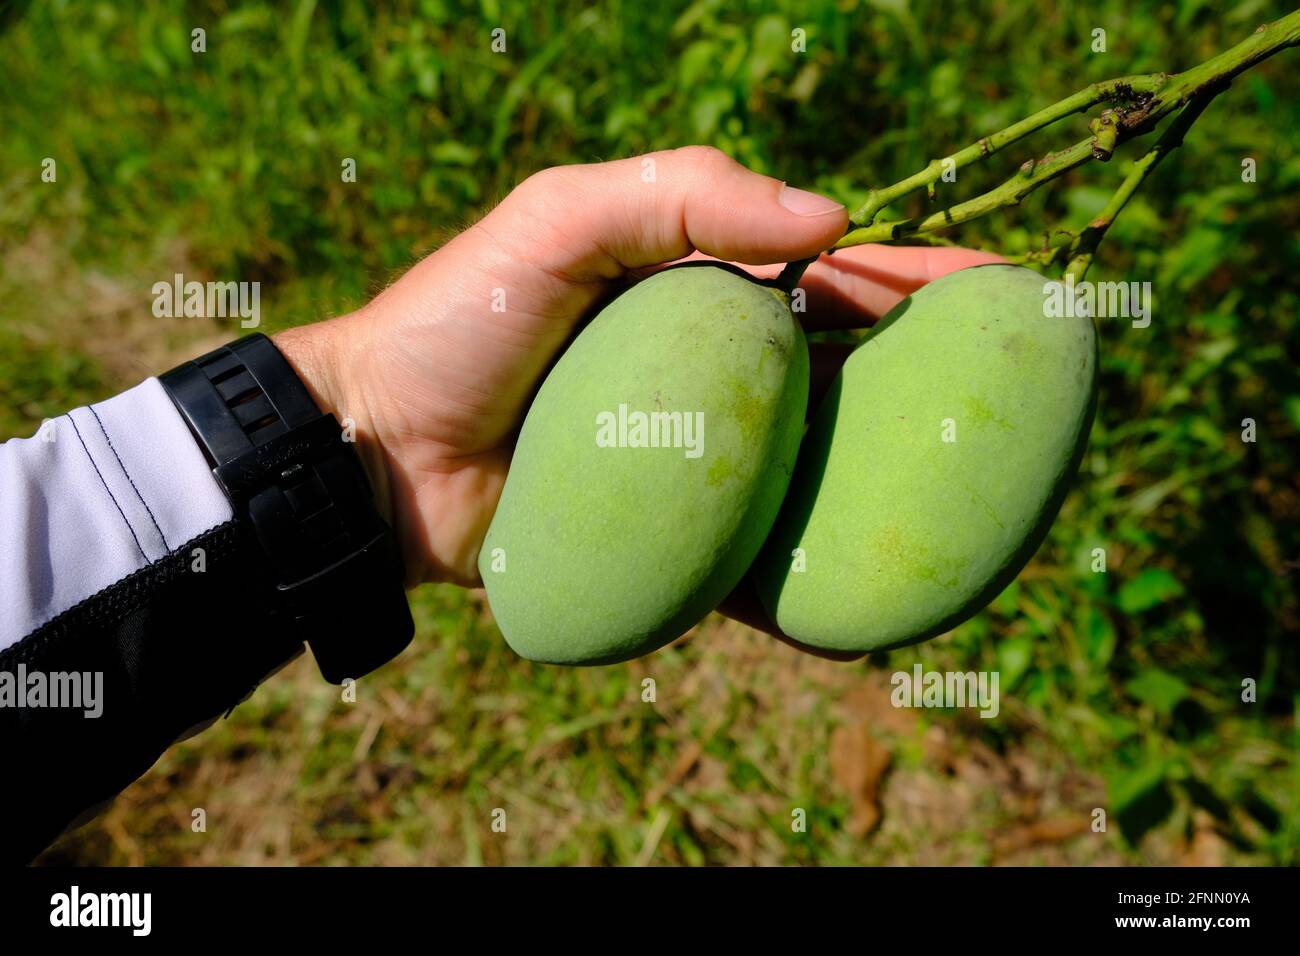 Indonesia Isole Anambas - Mango frutta in mano - Mangifera indica Foto Stock